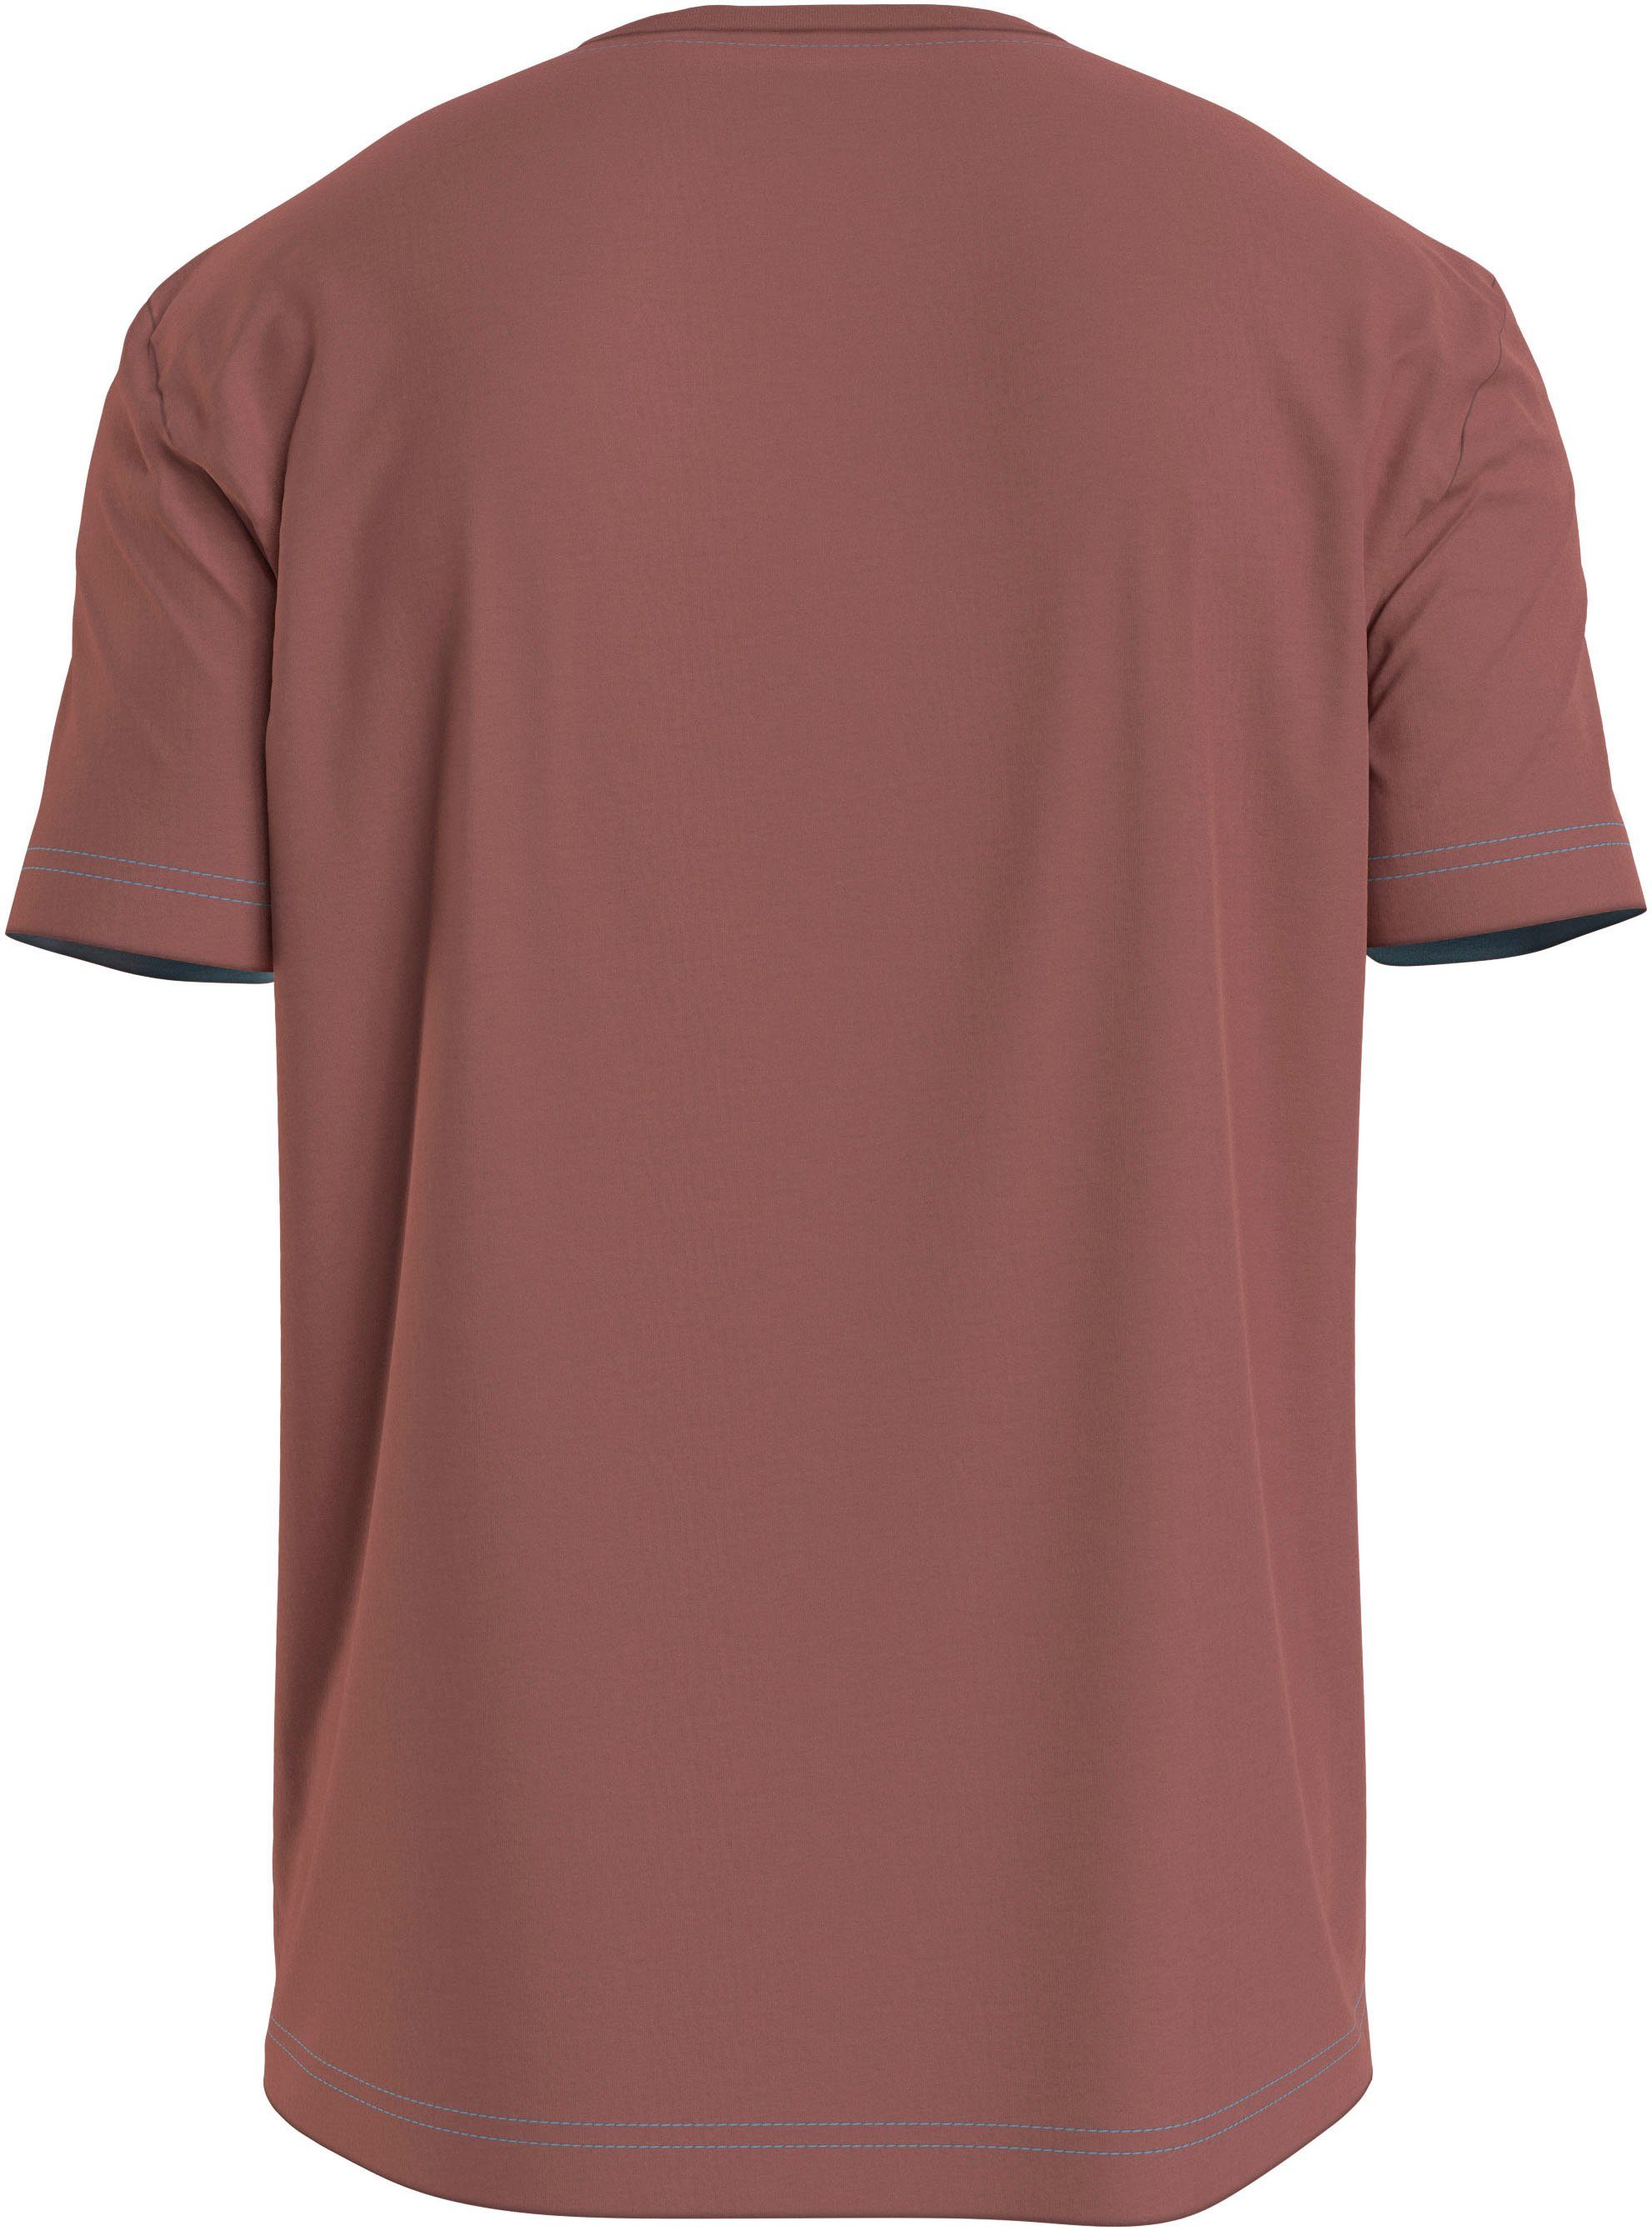 Klein Copper Calvin dickem Winterjersey Sun aus T-Shirt Micro Logo